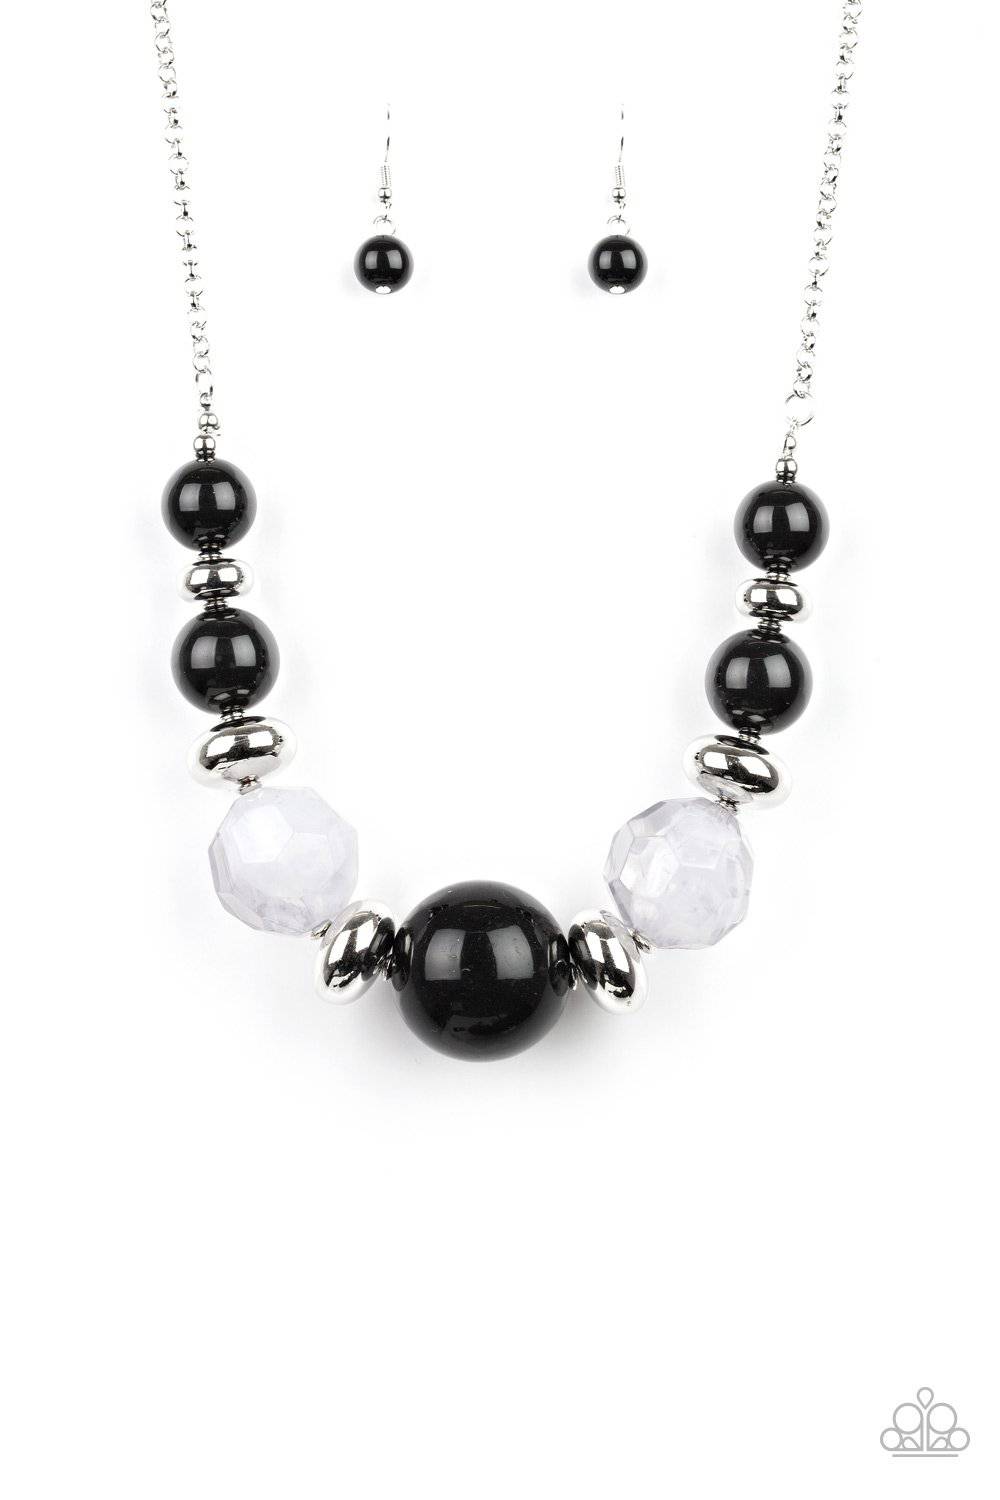 Daytime Drama - Black & Silver Bead Necklace - Paparazzi Accessories - GlaMarous Titi Jewels